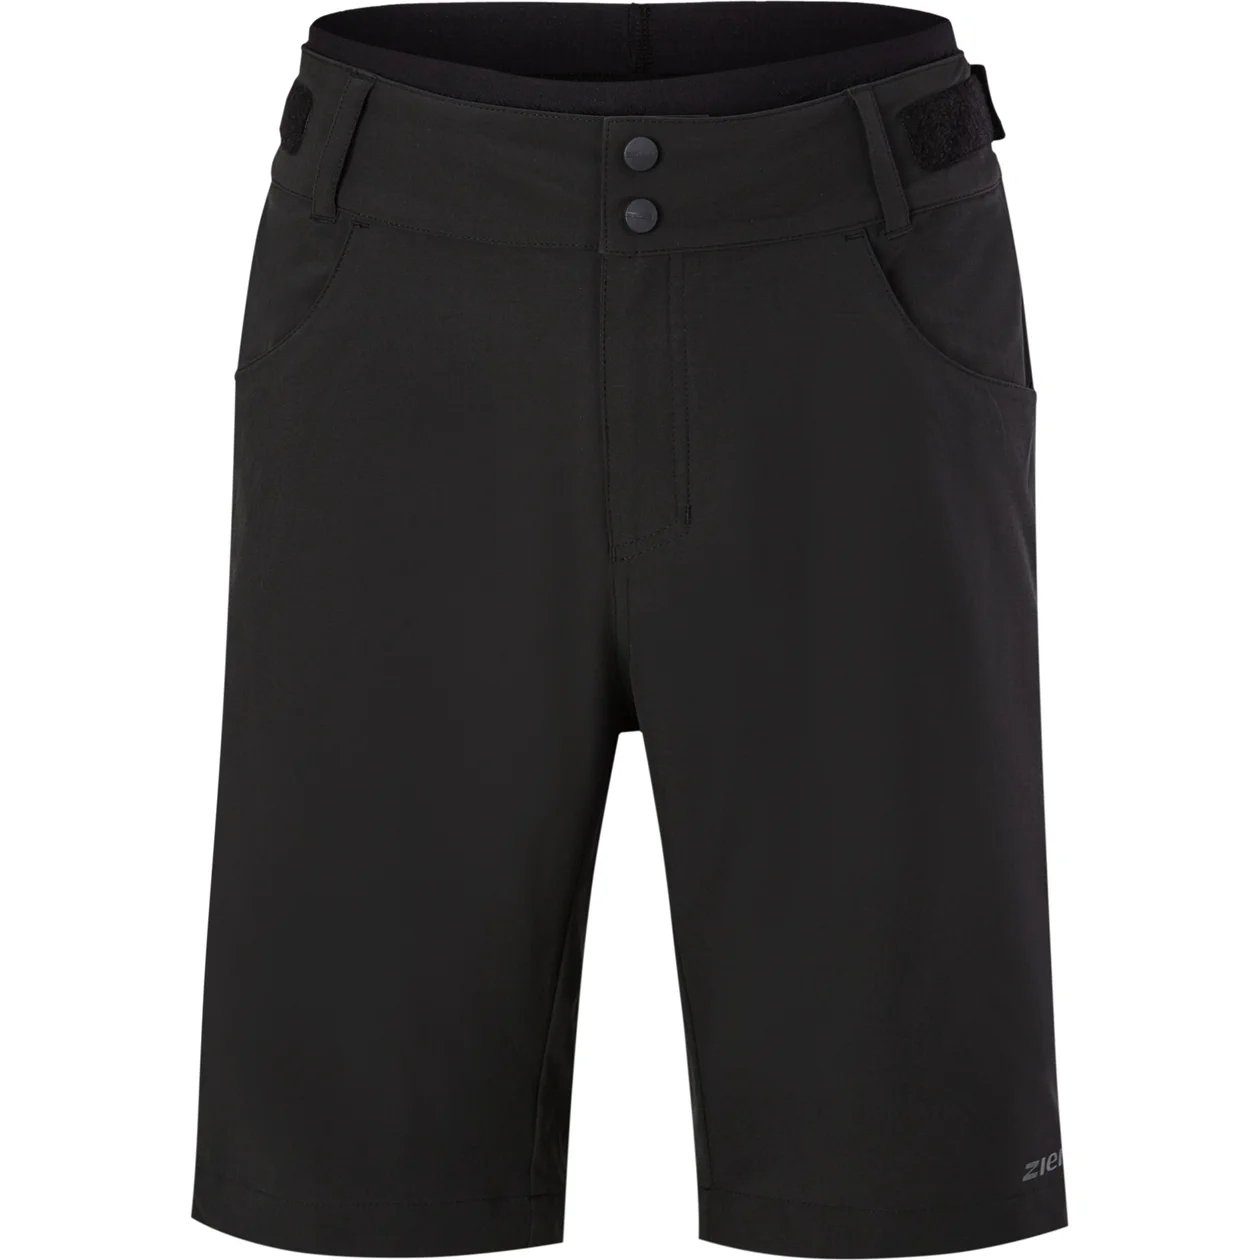 Ziener Trainingsshorts PELIK X-FUNCTION man (shorts) 12 black